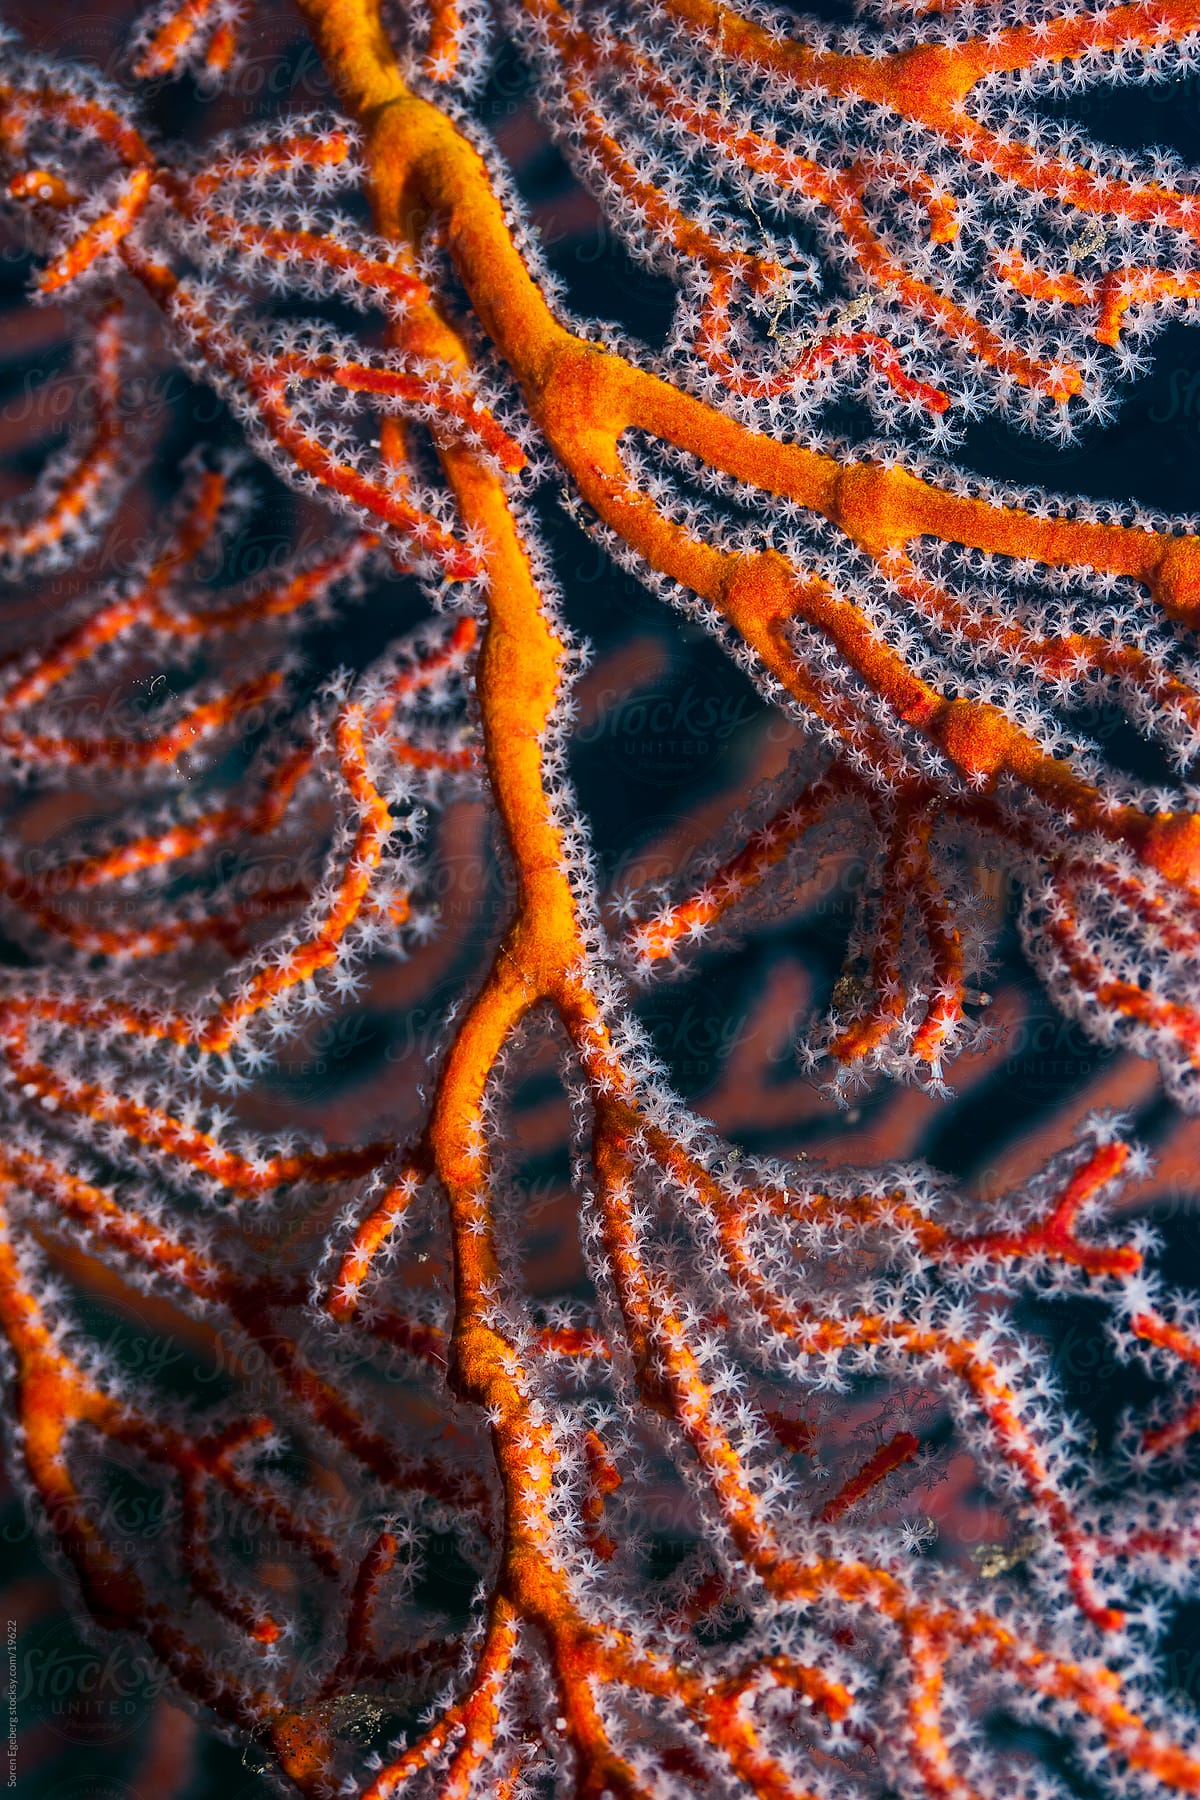 Orange sea fan coral on the reef underwater in Indonesia